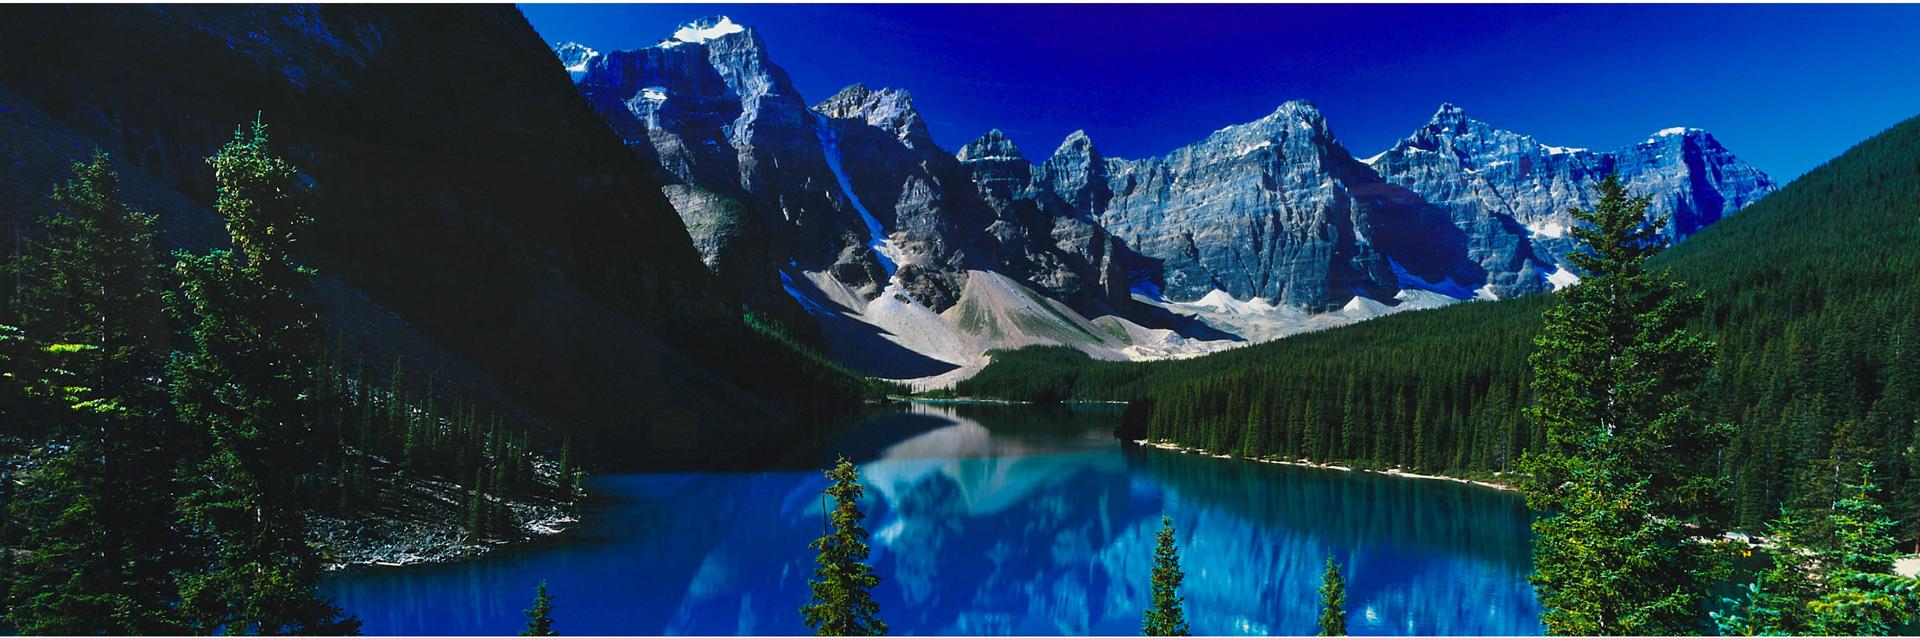 Peter Lik (1959) - Lake Moraine (Rocky Mountains, Canada), 2006